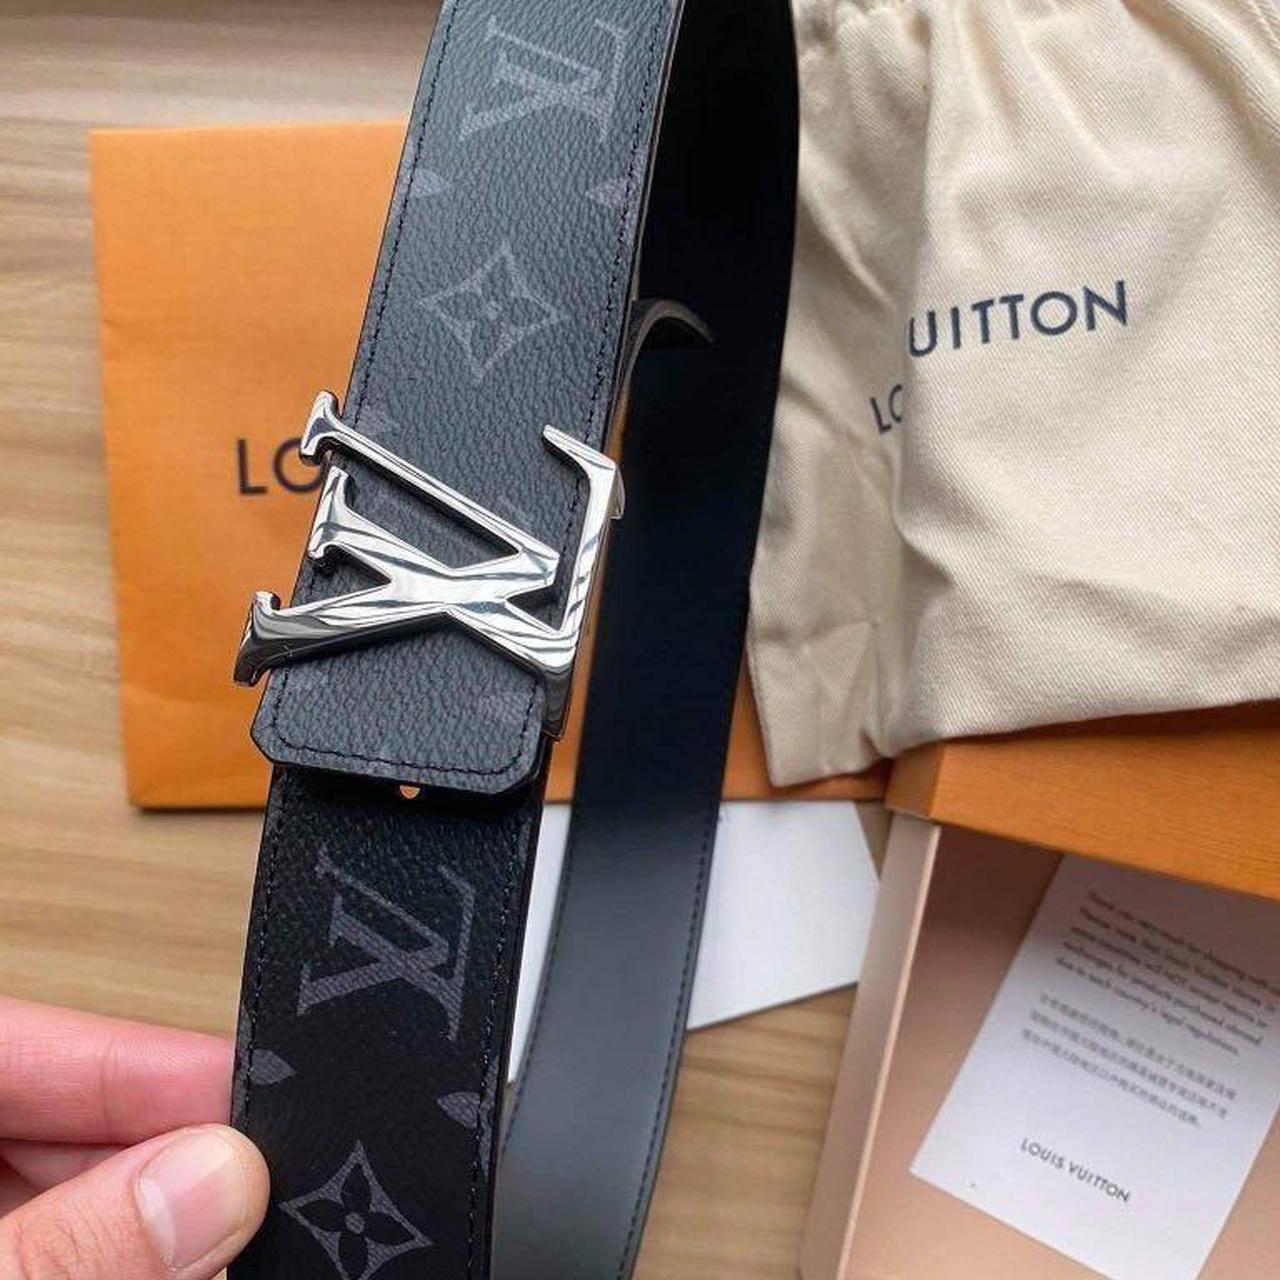 Louis Vuitton Belts for Men - Poshmark